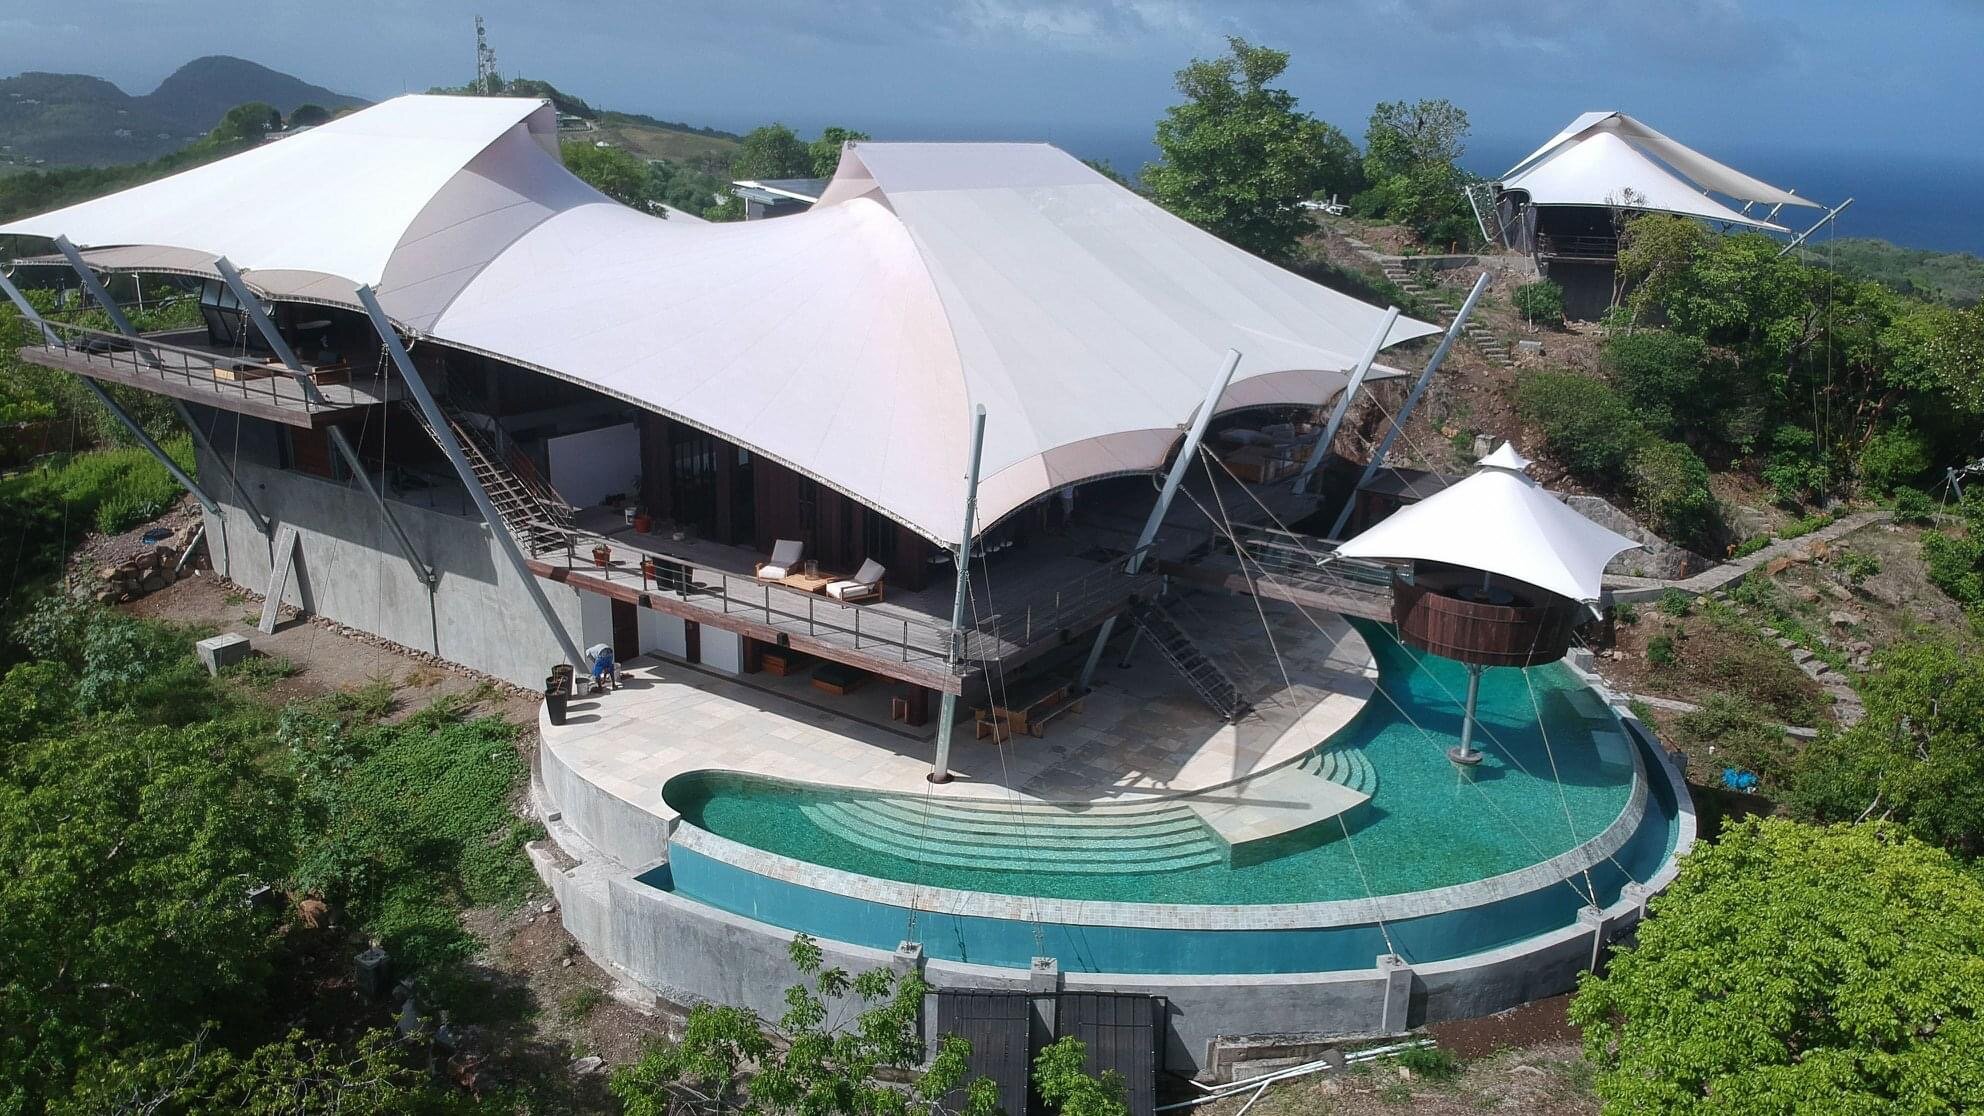 S.E.A.-Studio-Environmental-Architecture-David-Hertz-FAIA-Sail-House-Cloud9-Bequia-Saint-Vincent-Grenadines-Caribbean-Island-sustainable-regenerative-restorative-green-design-hospitality-tropical-resort-hotel-biomimetic-tensile-structure-select-22.JPG